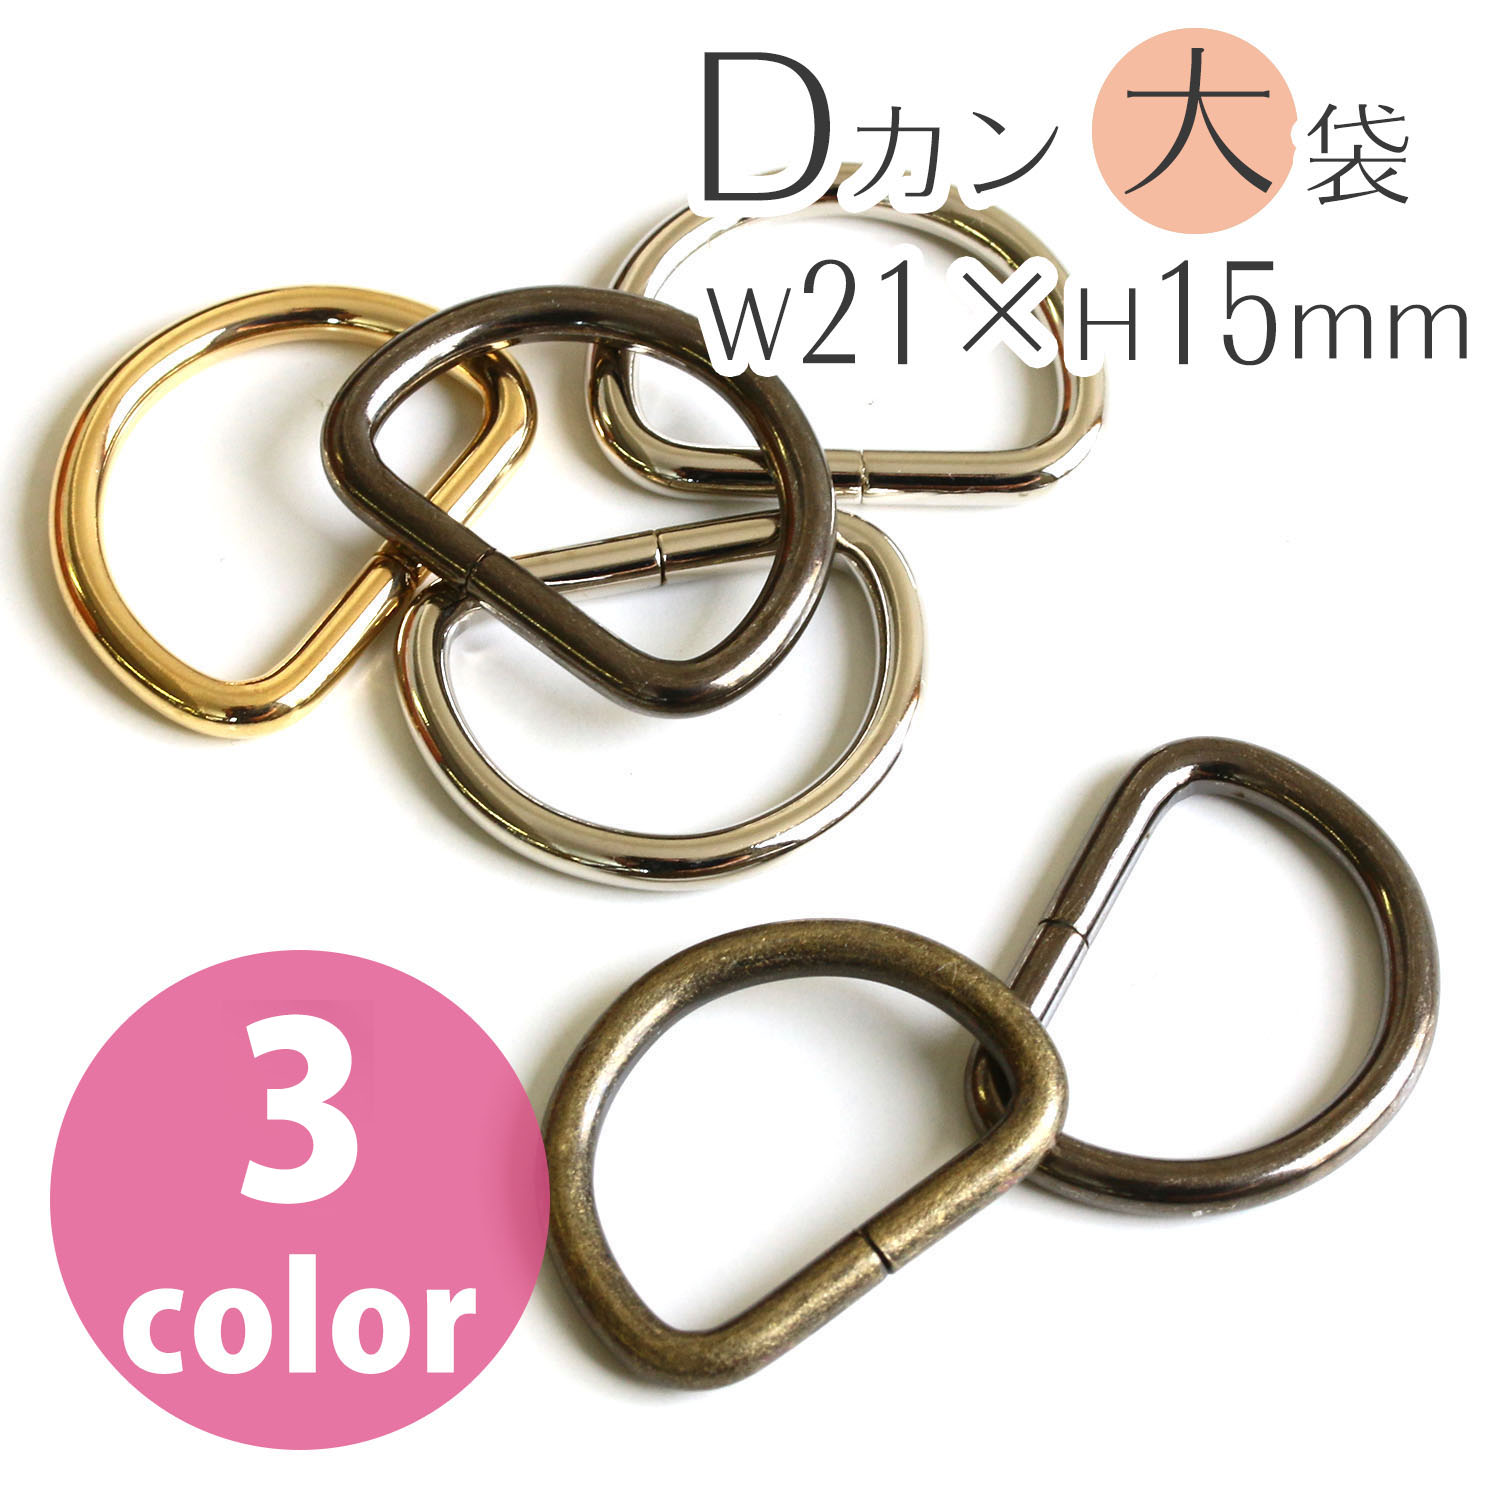 D-Ring 21 x 15mm", diameter 3mm 120pcs (bag)